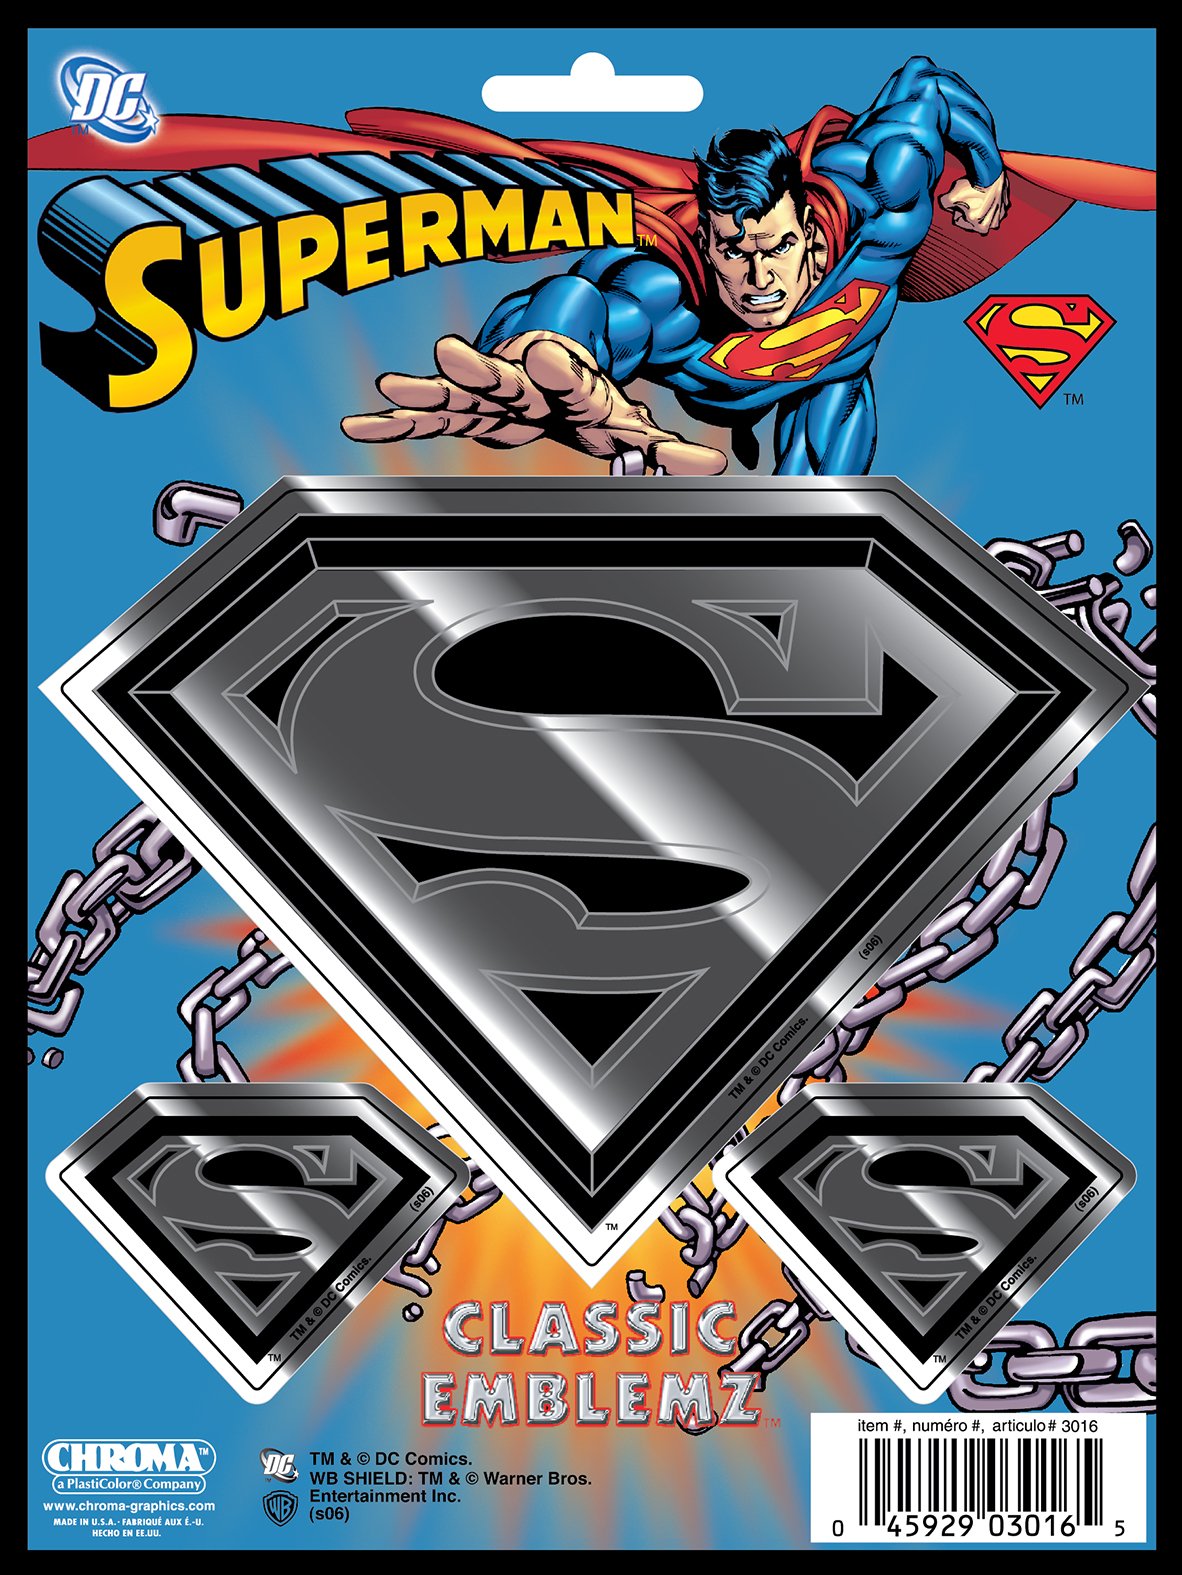 Chroma Graphics 3016 Classic Emblemz Superman-Aufkleber, regulär, 3 Stück von CHROMA